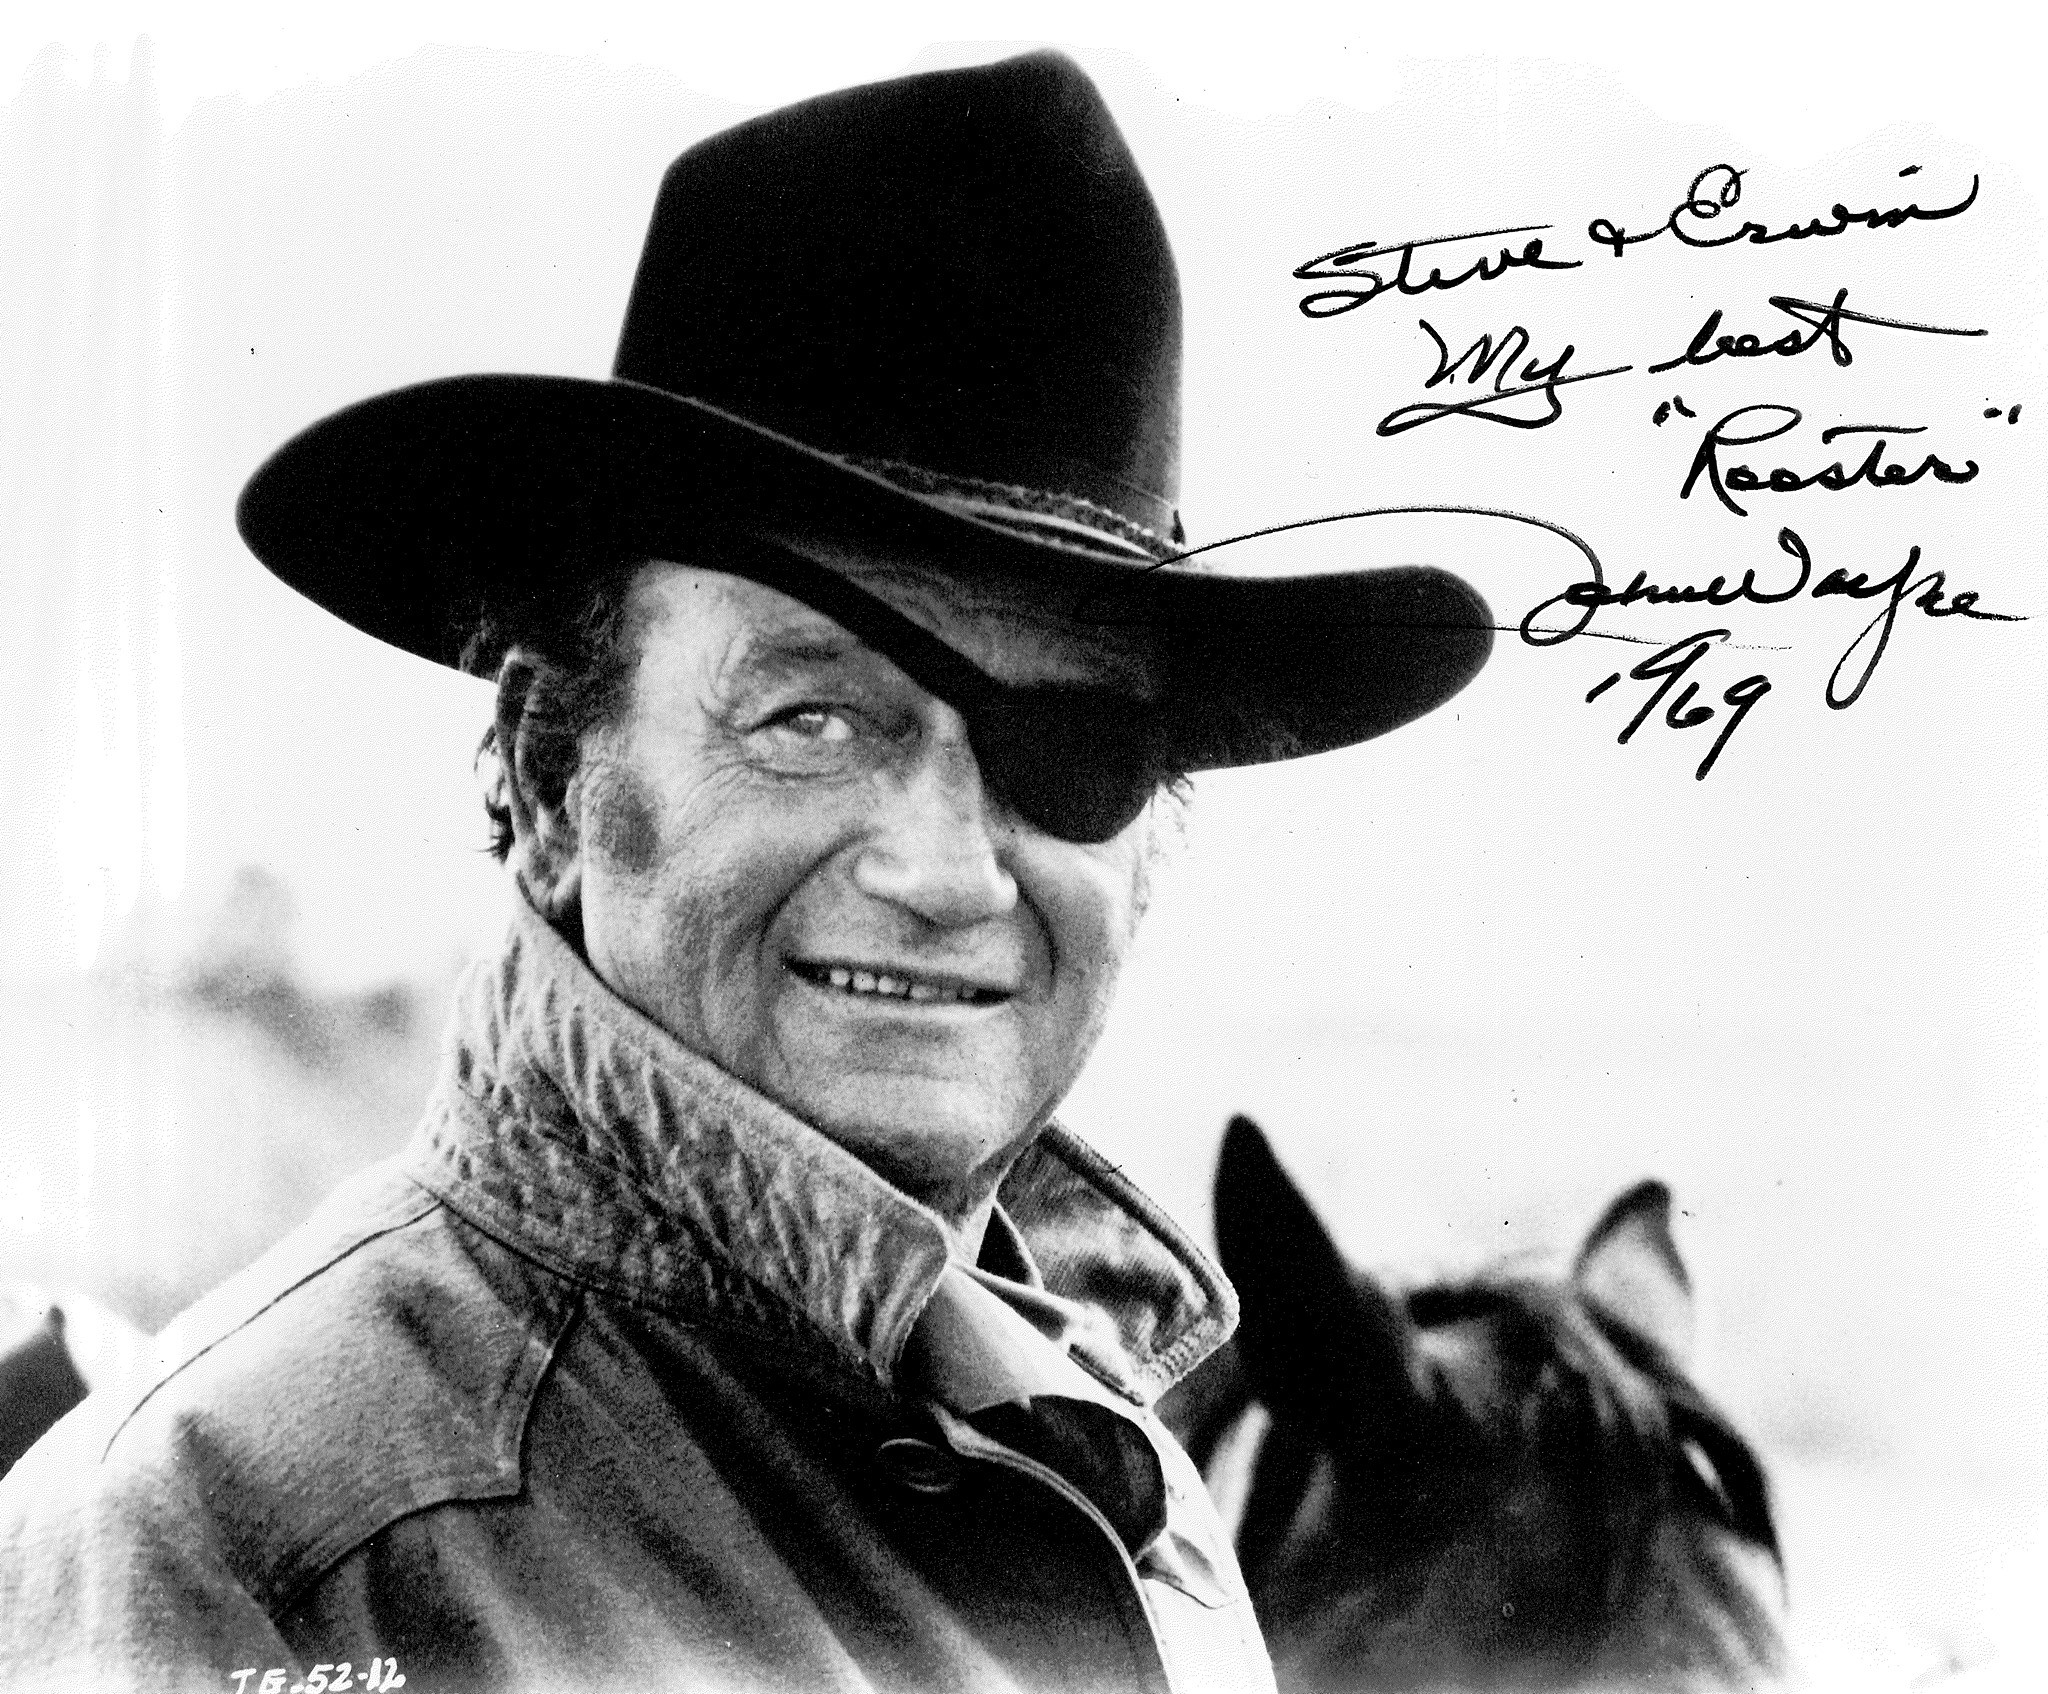 A Close Encounter With John Wayne | File 770